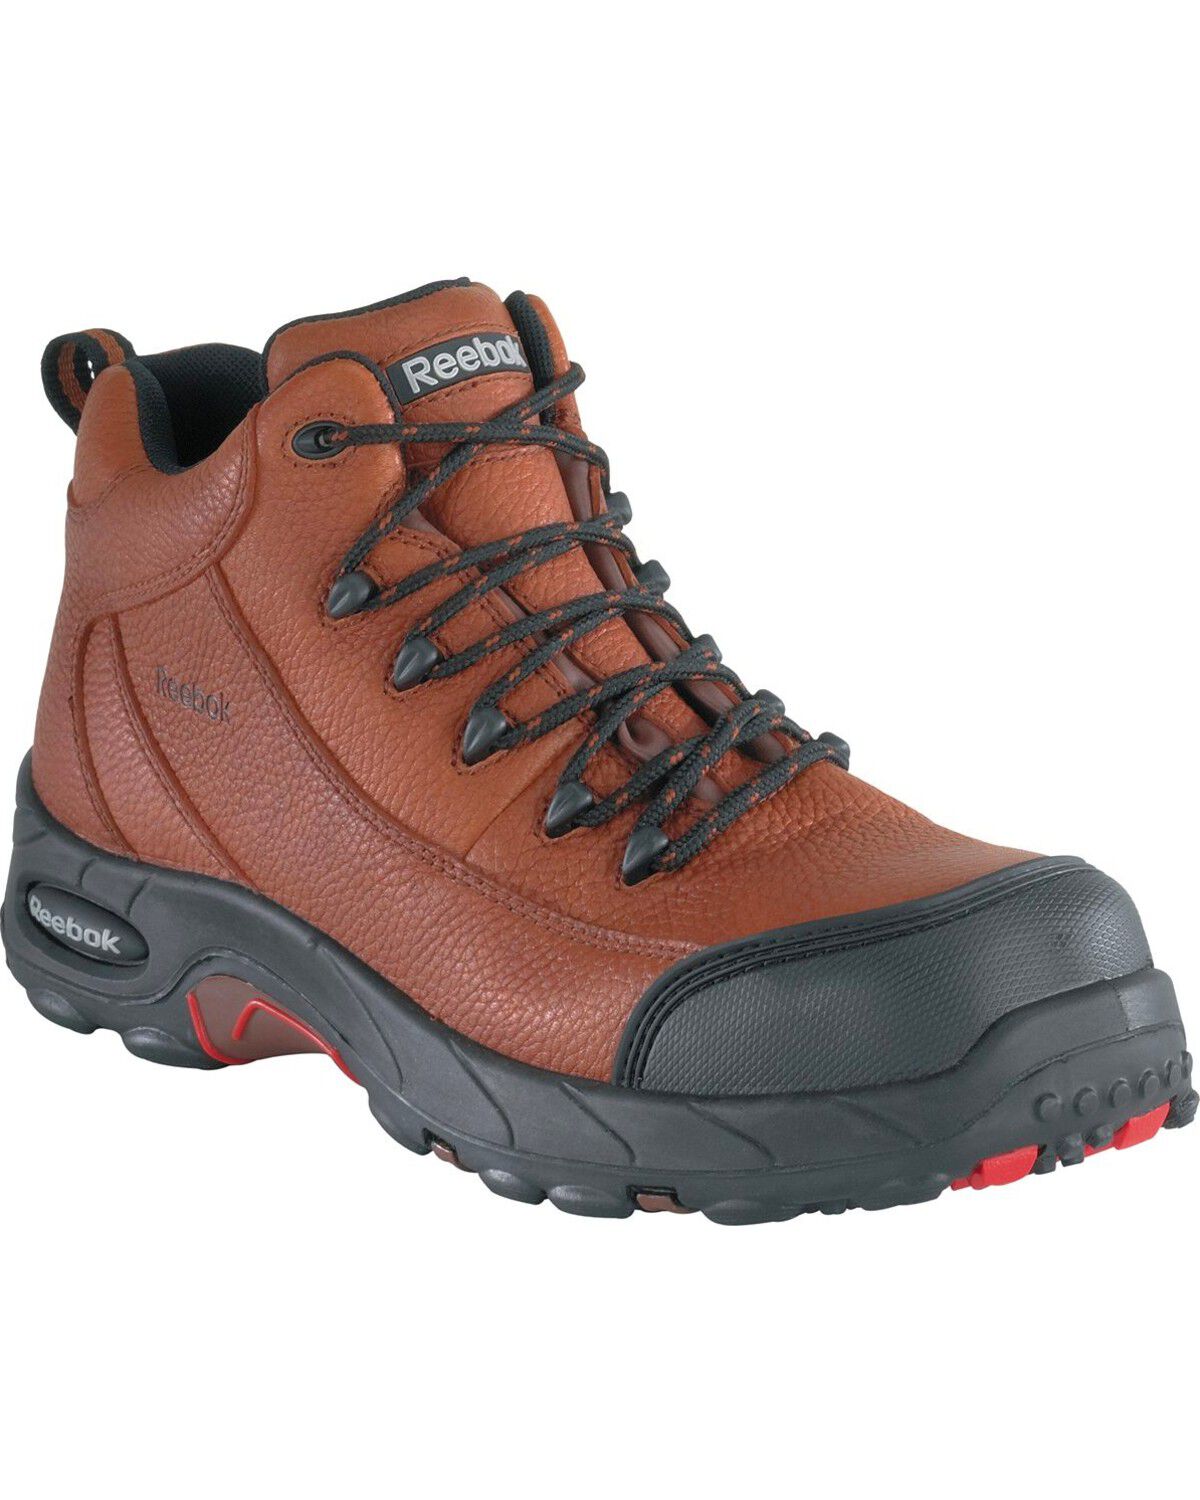 reebok hiking boots womens